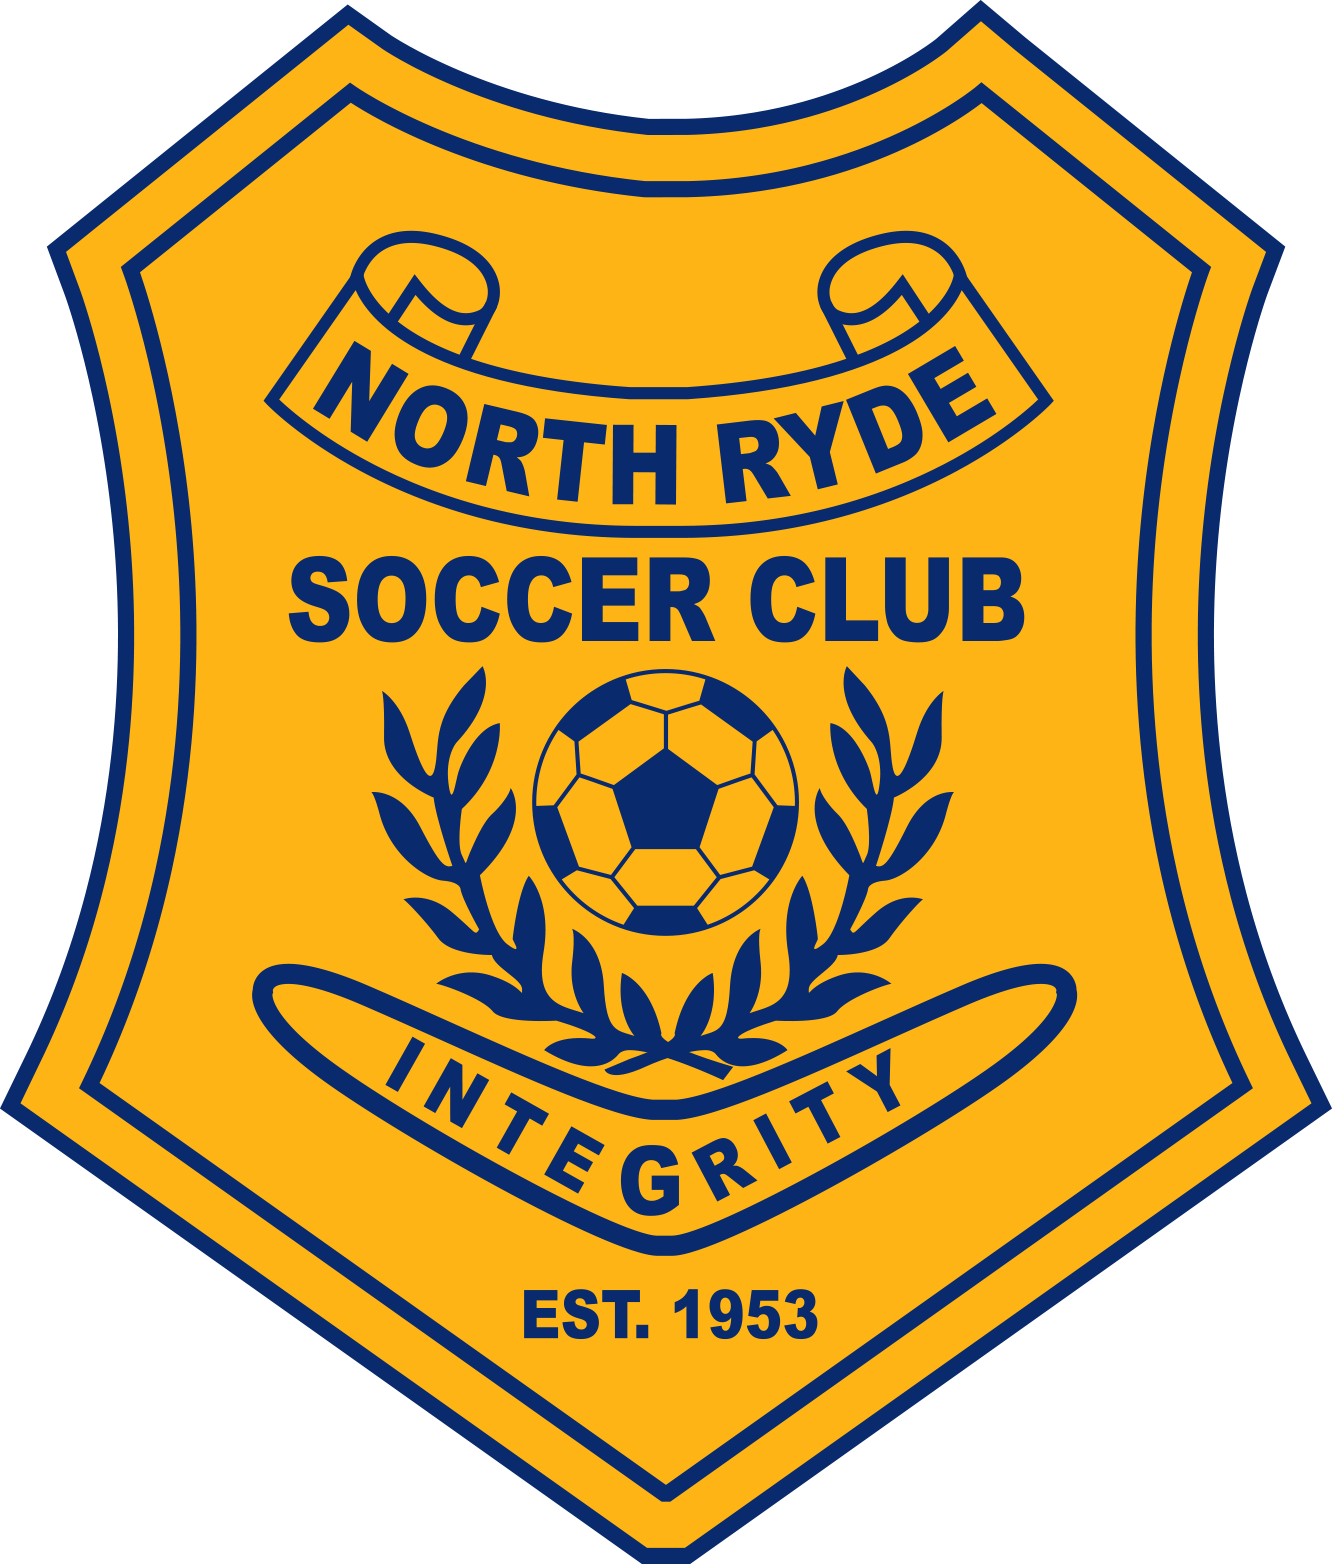 North Ryde Soccer Club